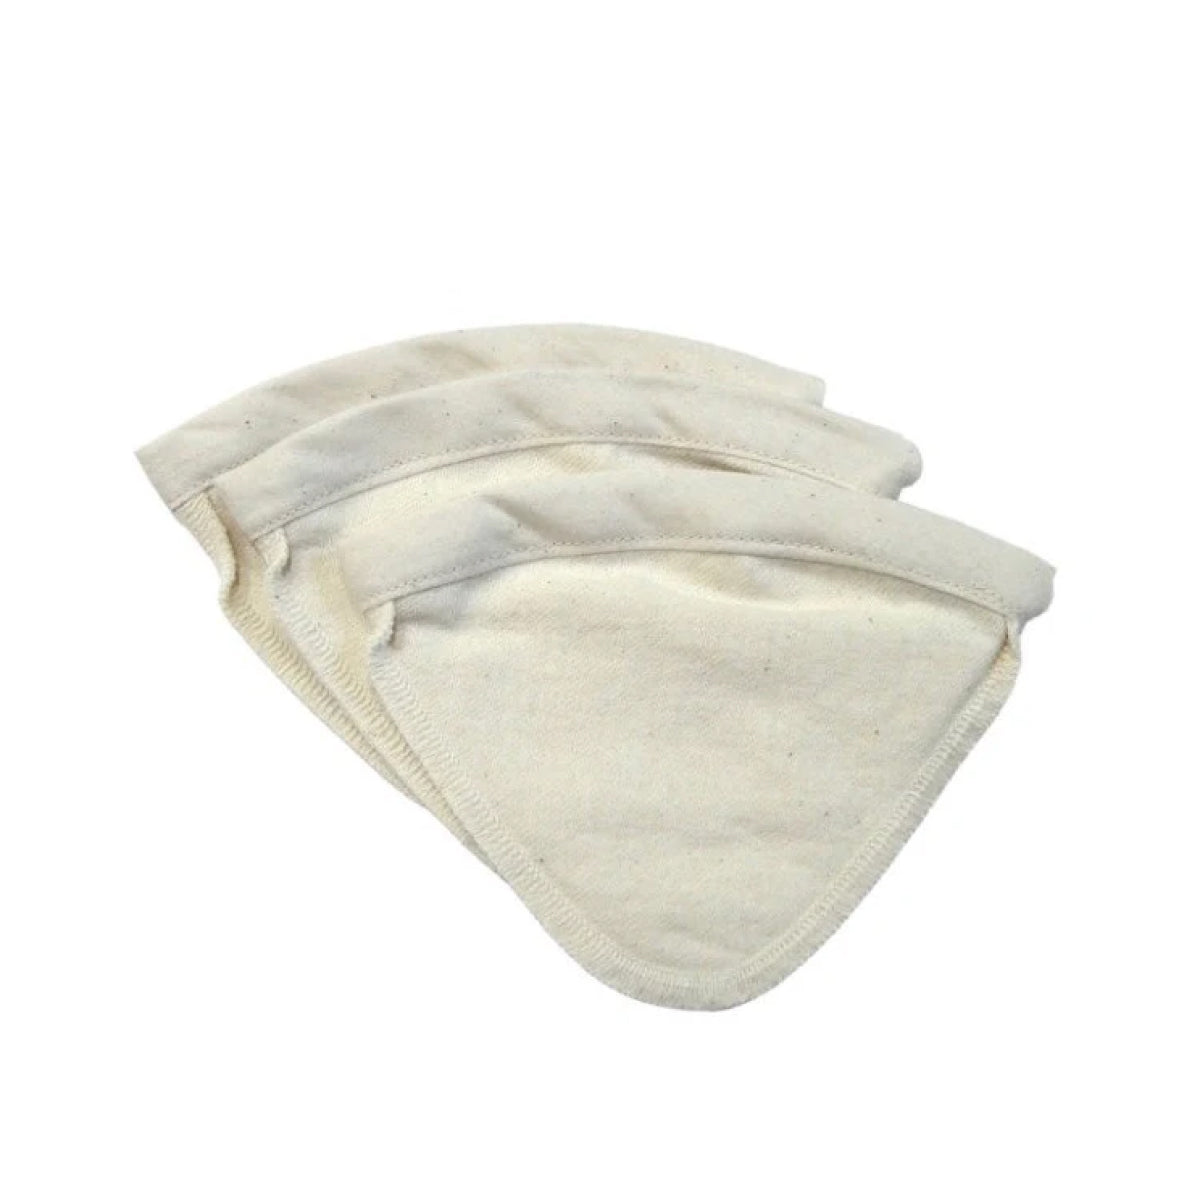 Cloth Filter for Hario Drip Pot